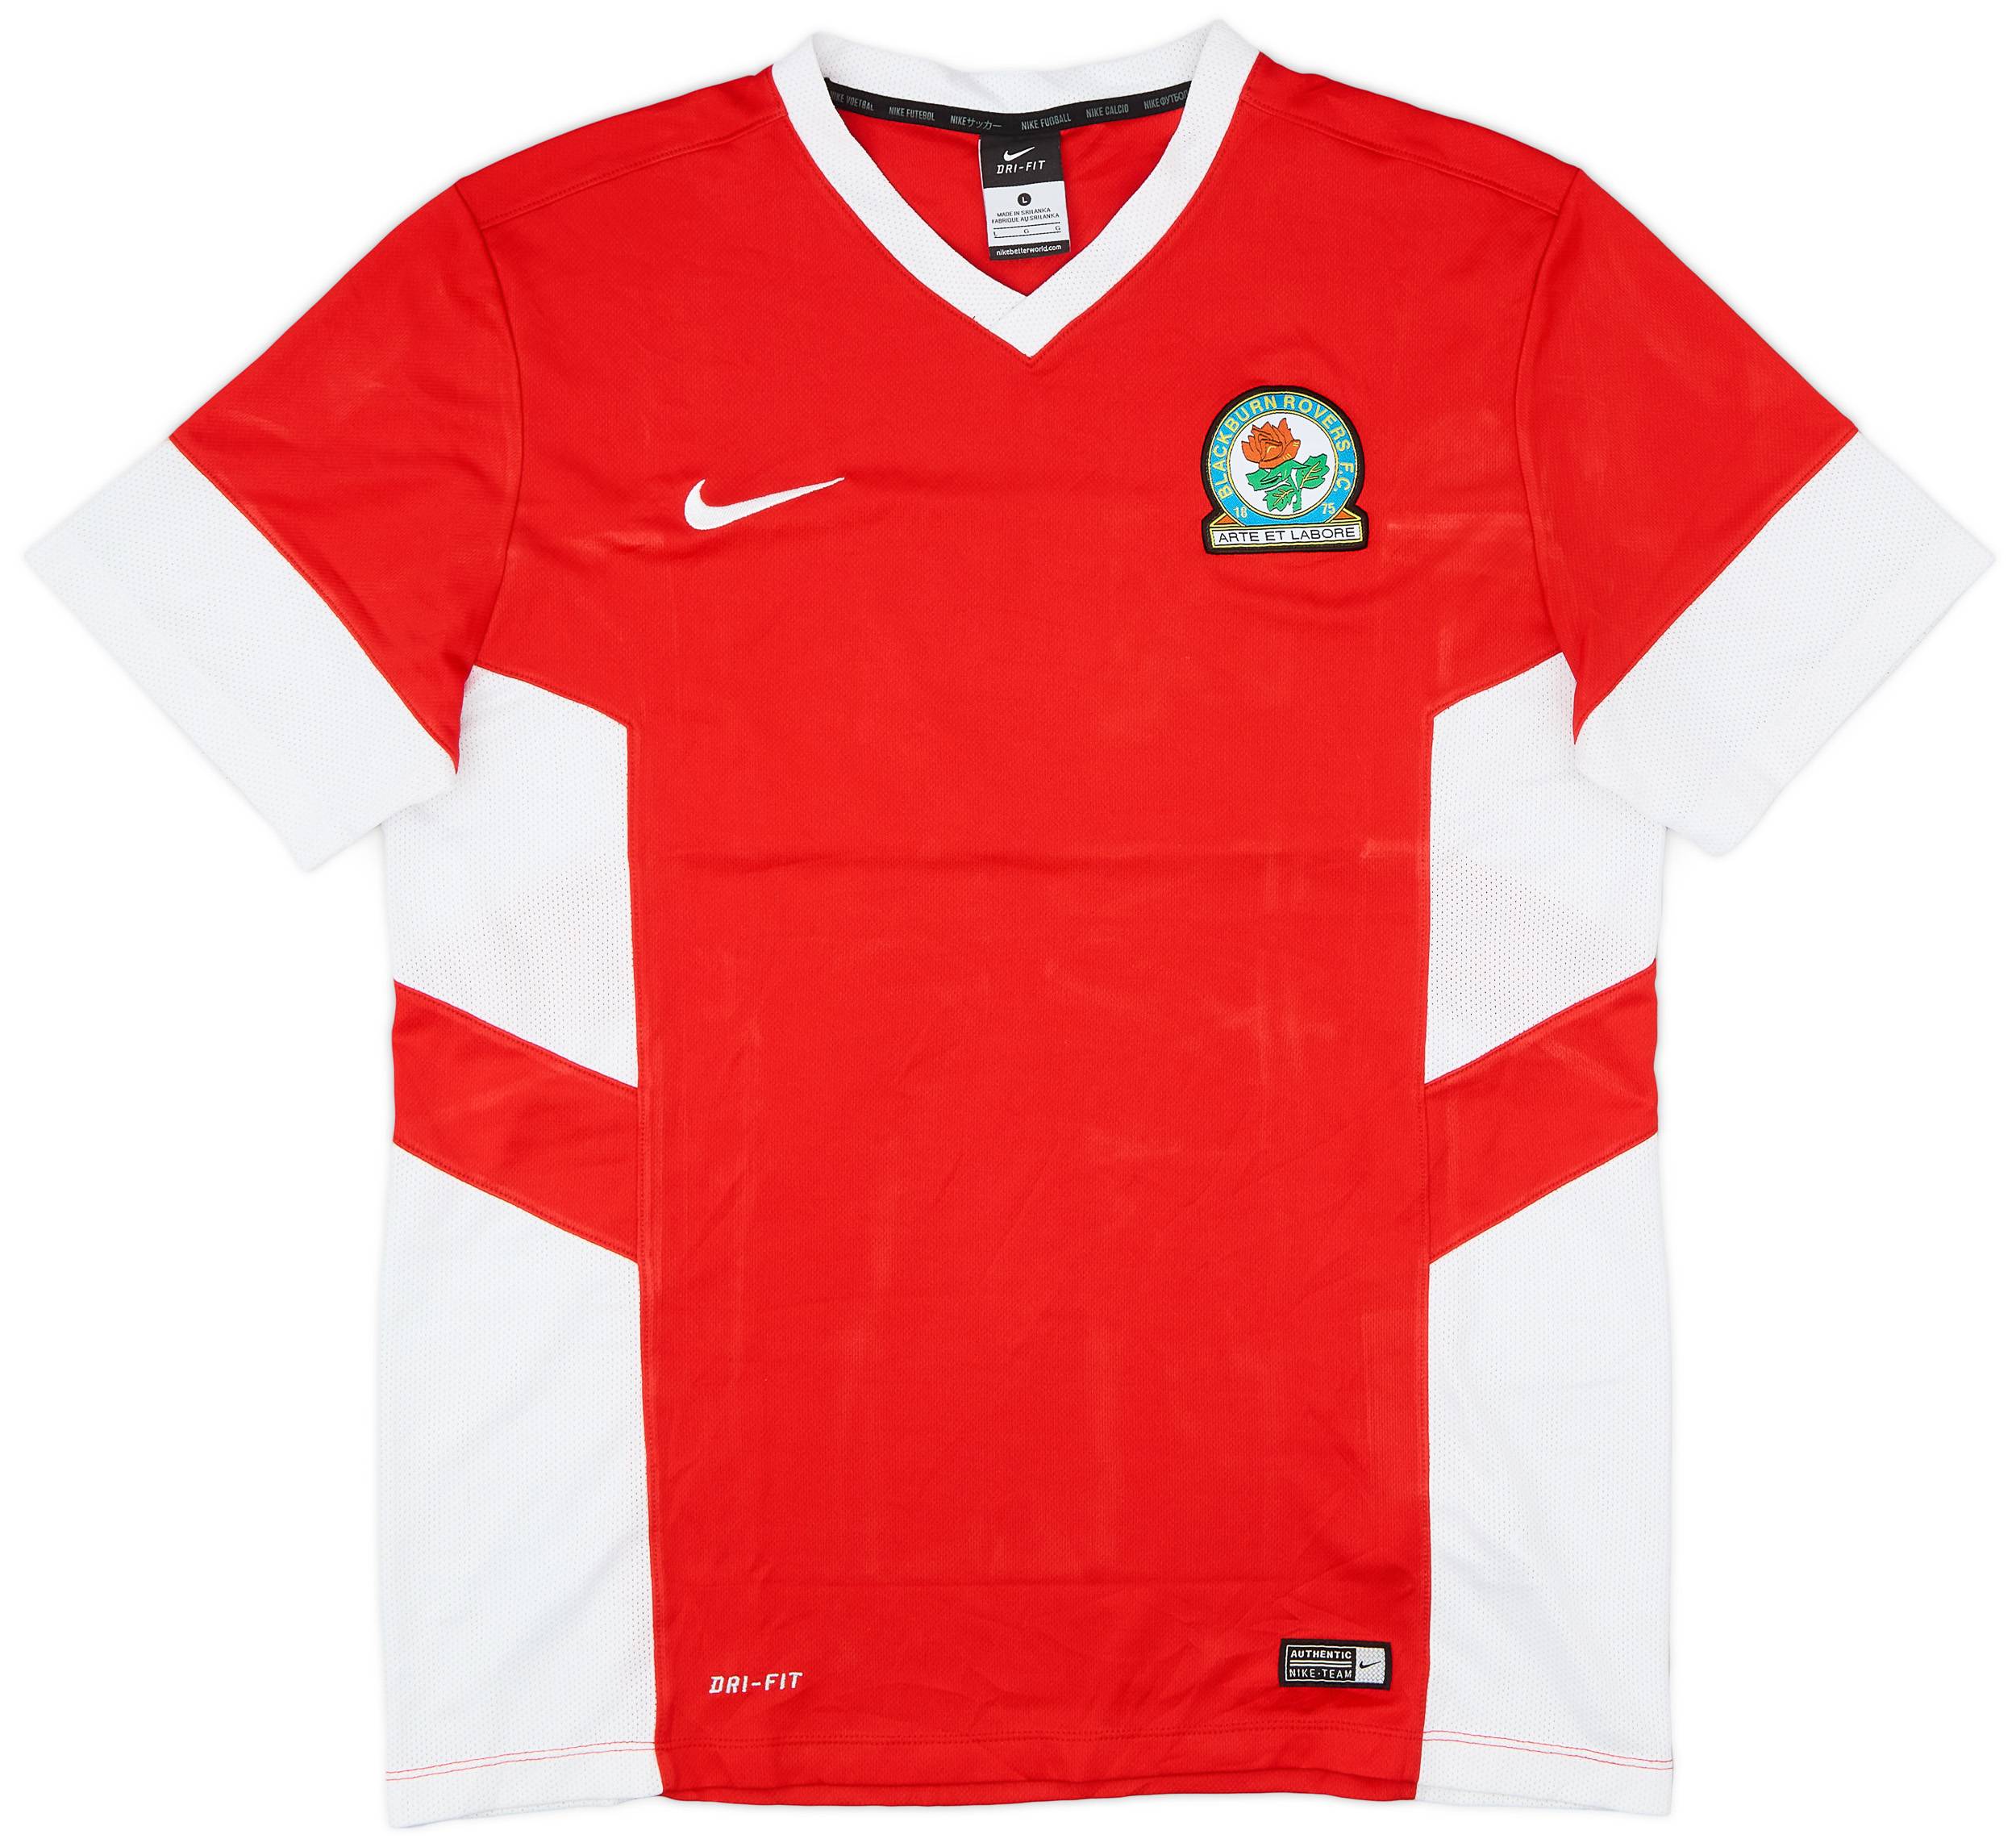 2014-15 Blackburn Rovers Nike Training Shirt - 9/10 - (L)